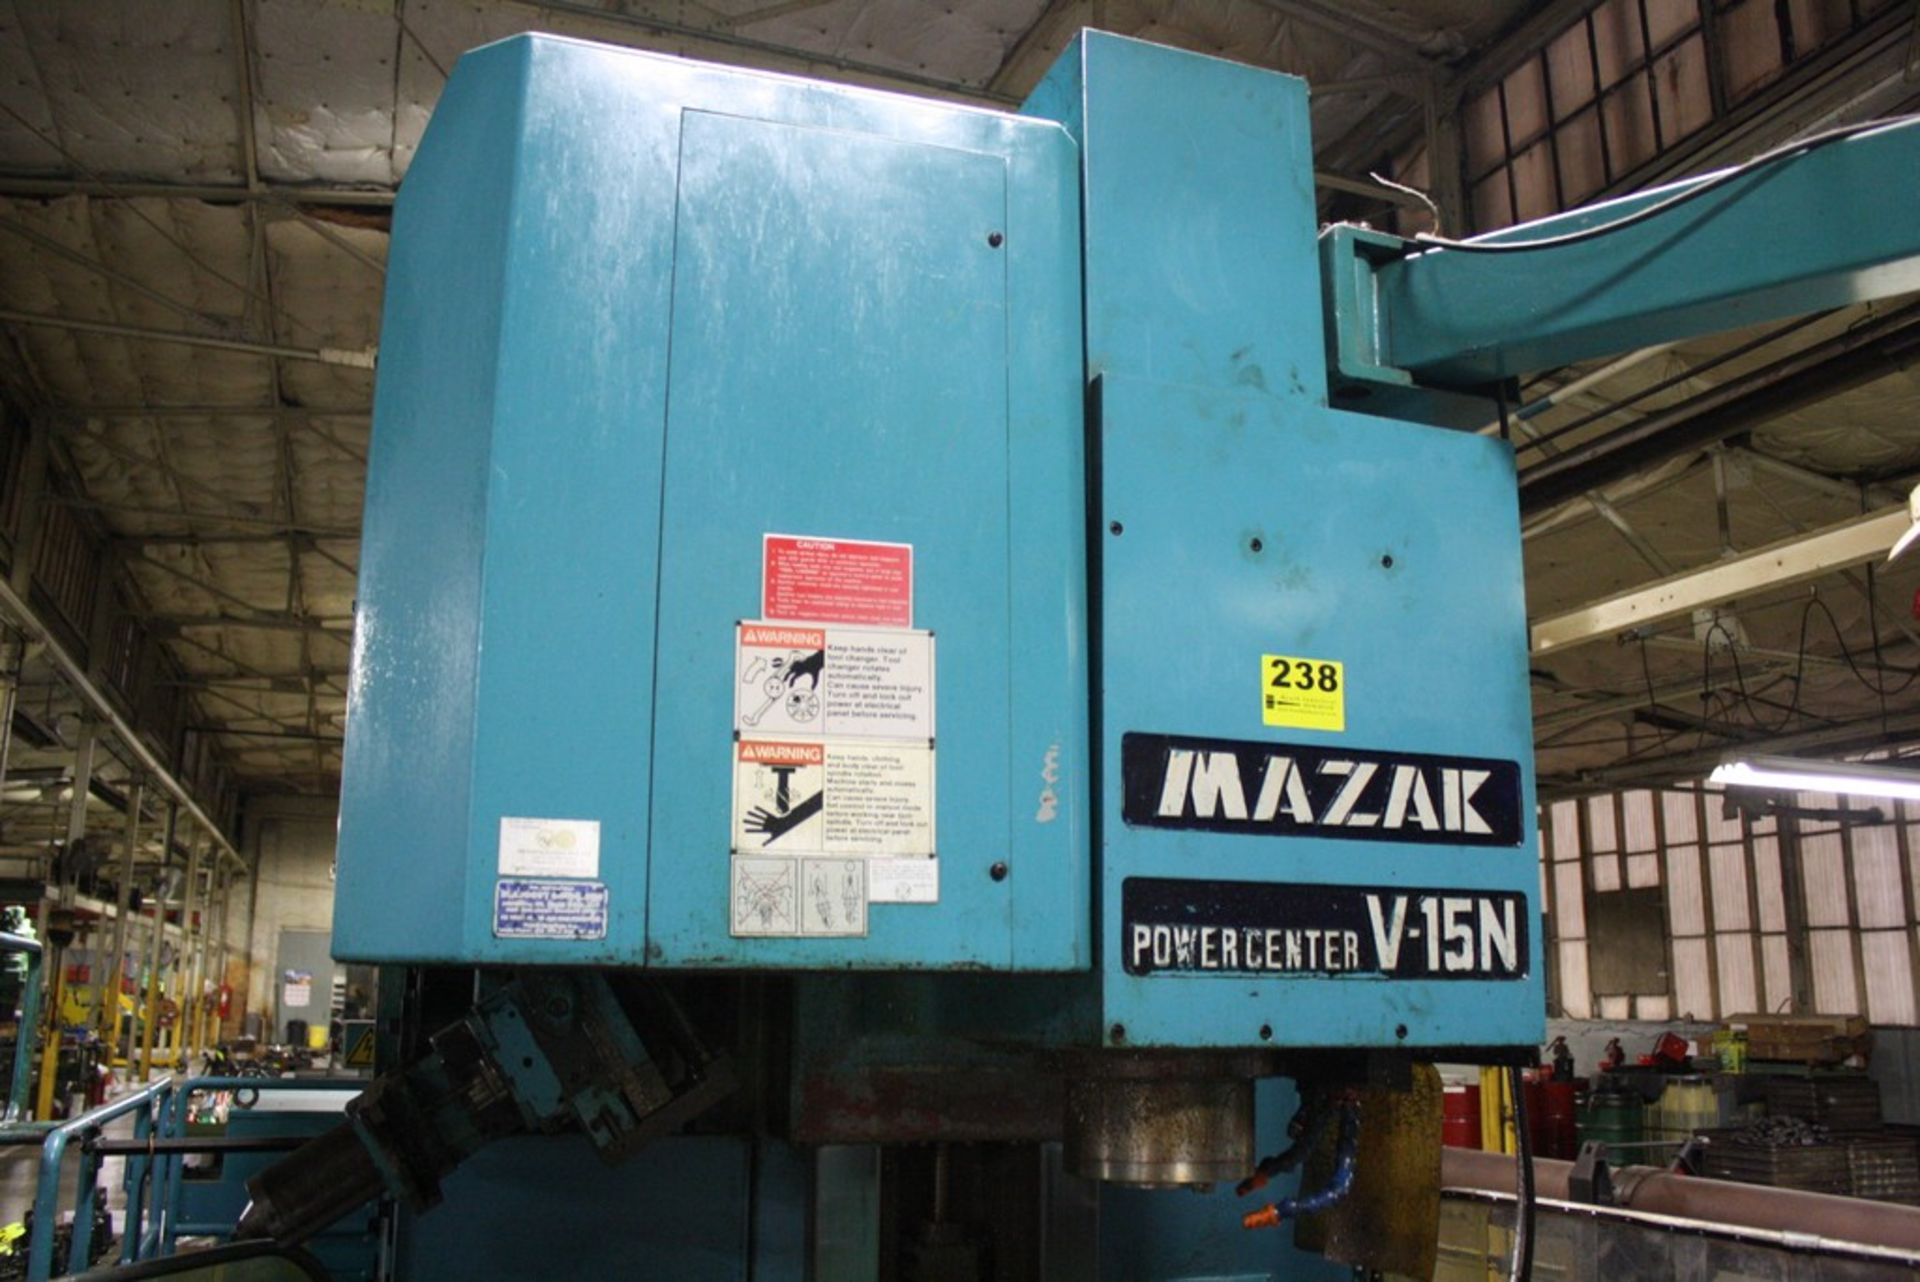 MAZAK MODEL V-15N CNC VERTICAL MACHINING CENTER, S/N 56963, 40 STATION AUTOMATIC TOOL CHANGER, FANUC - Image 2 of 6